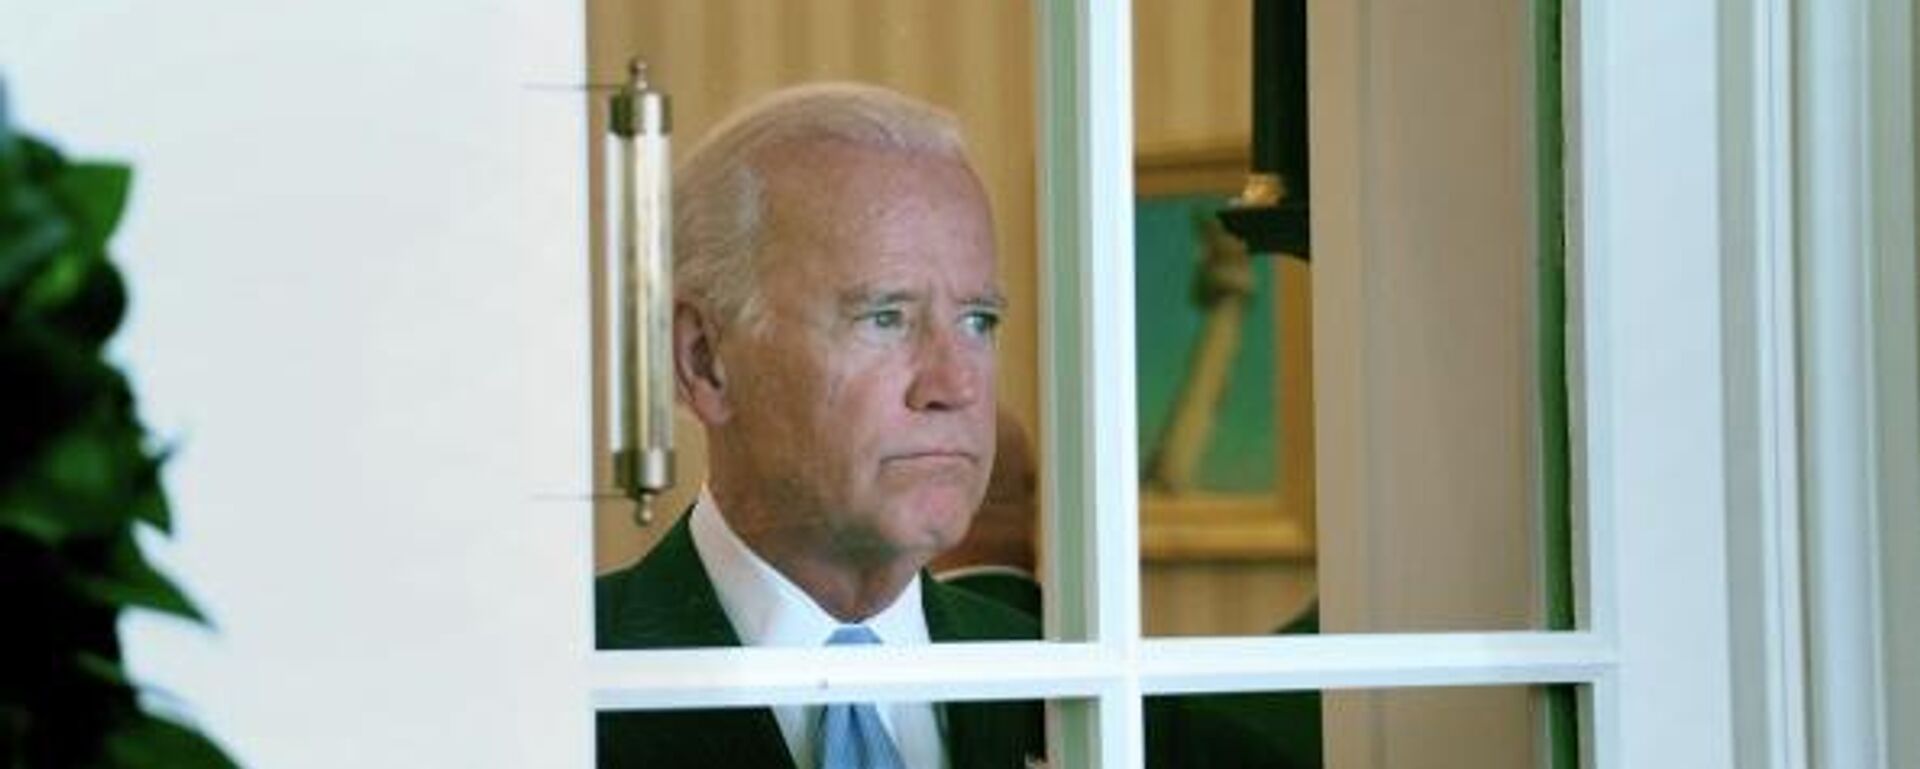 Sad Joe Biden photo from 2014. Source of endless internet memes. - Sputnik International, 1920, 30.09.2022